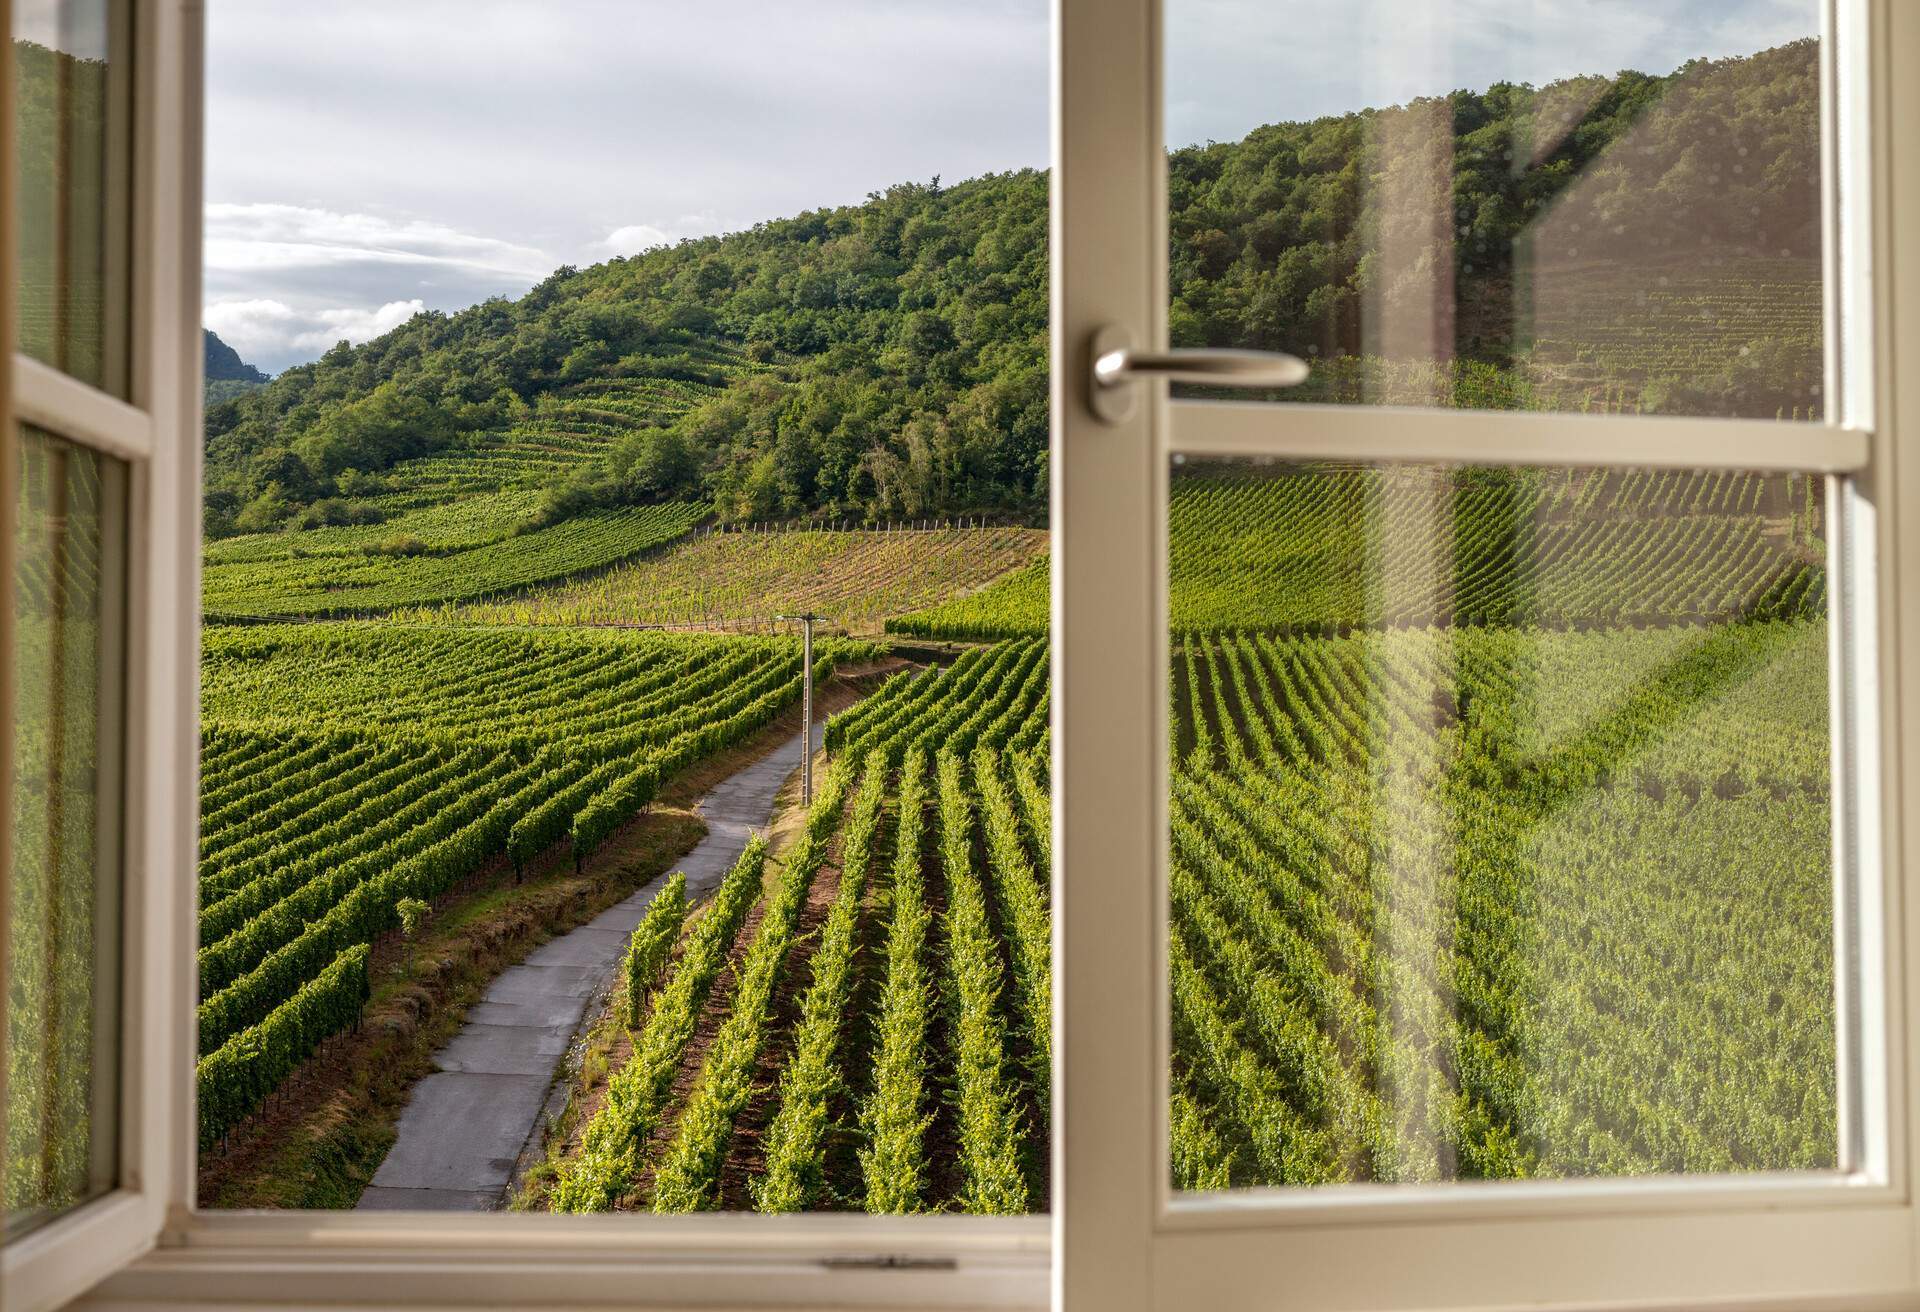 Alongside a lush green hillside is a vineyard viewed from a window.